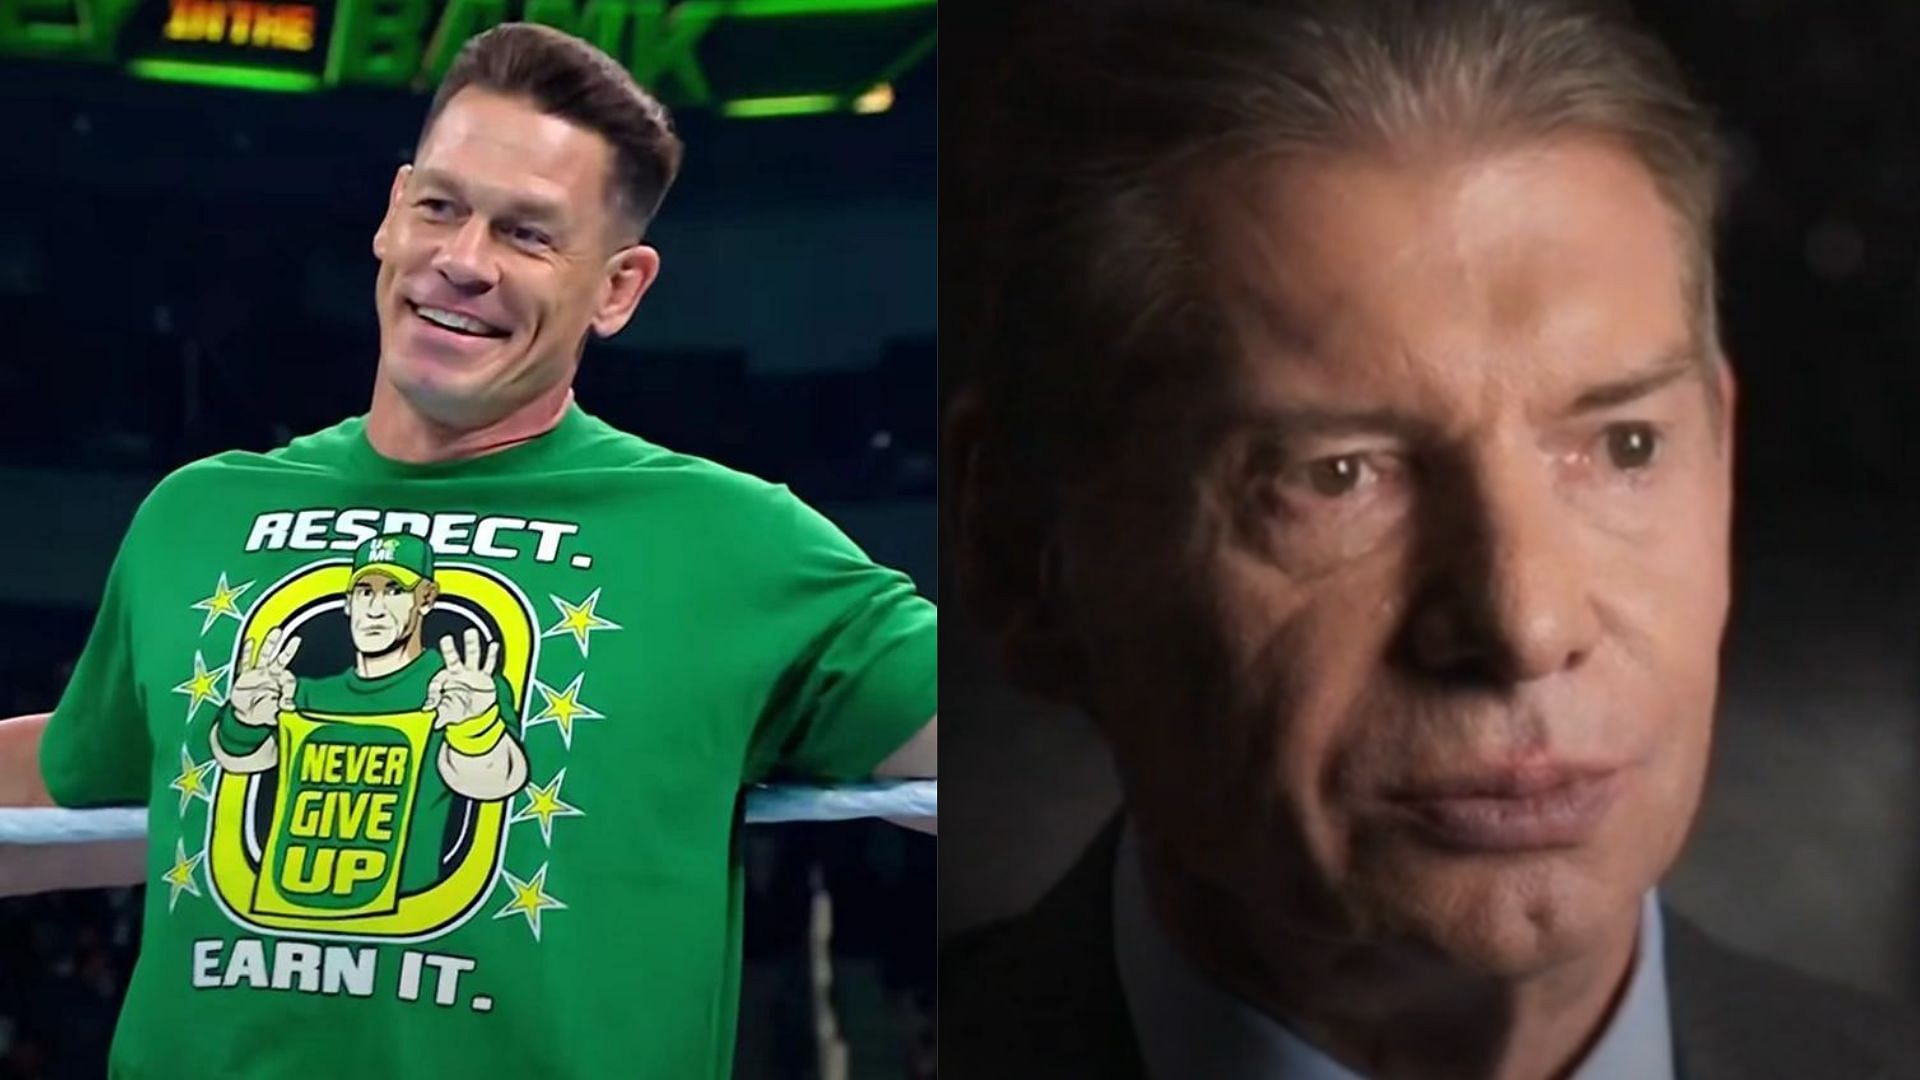 John Cena (left); Vince McMahon (right)